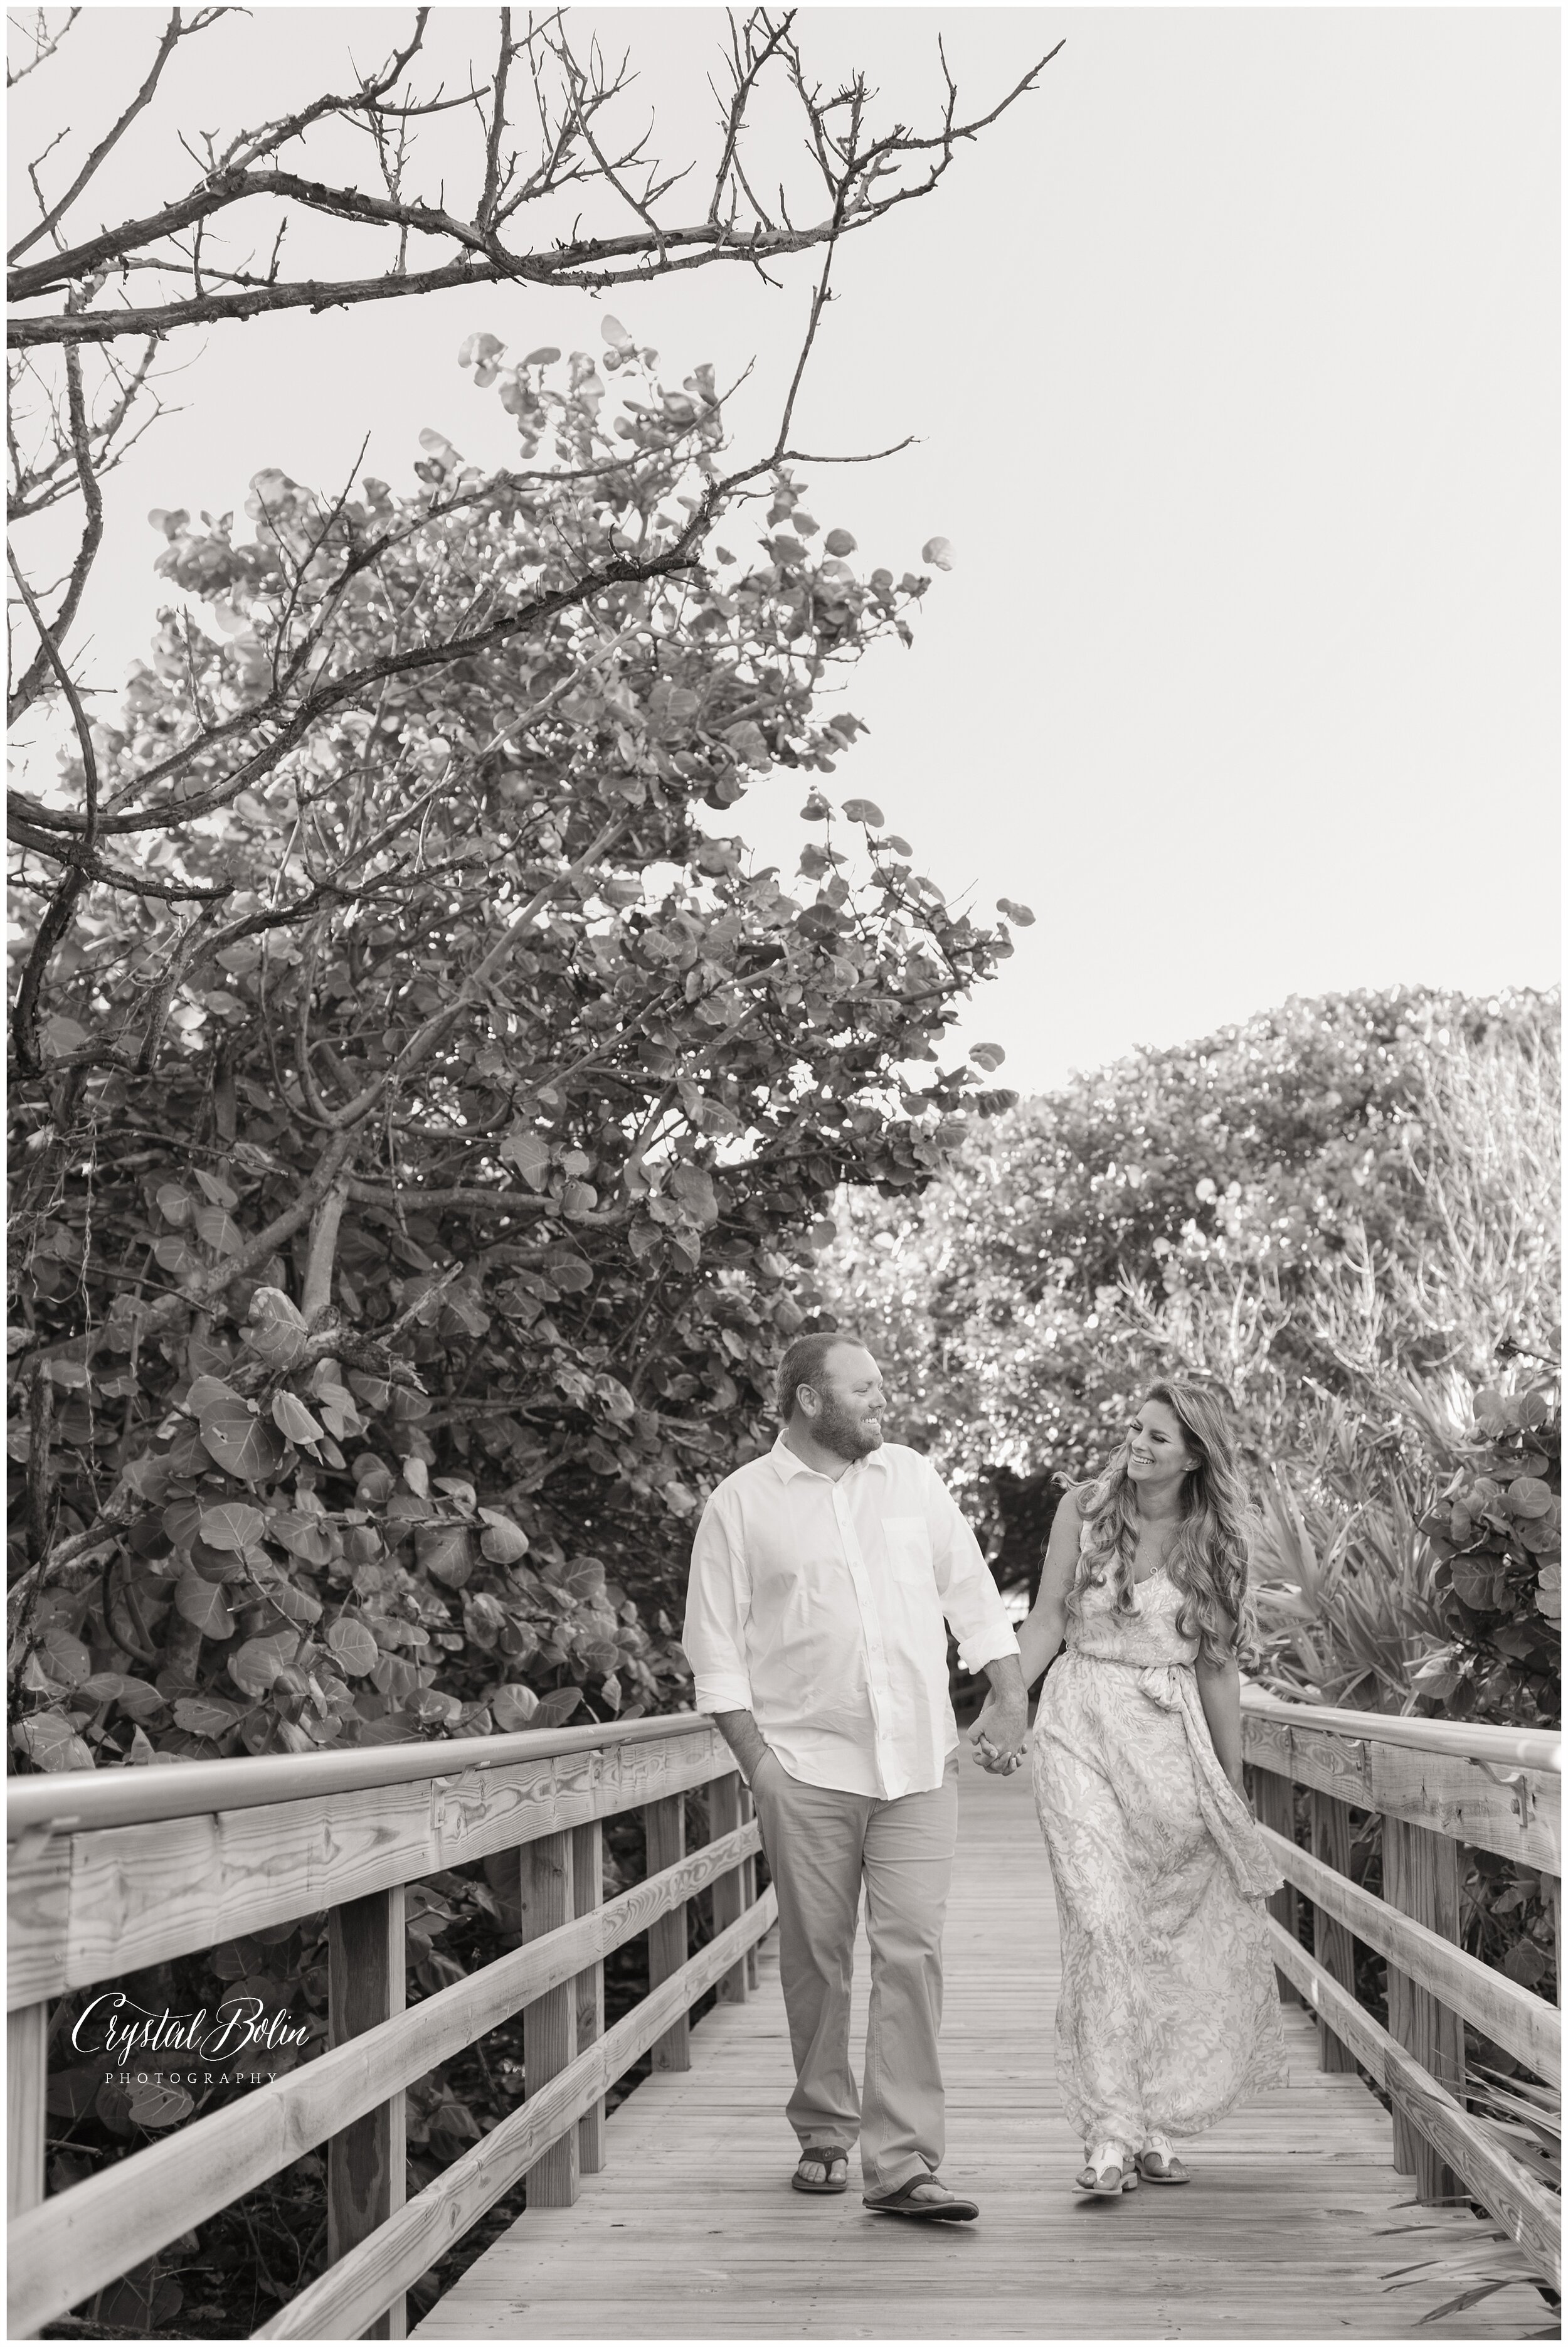 Samantha & Daniel's Engagement Photos in Jupiter, Florida